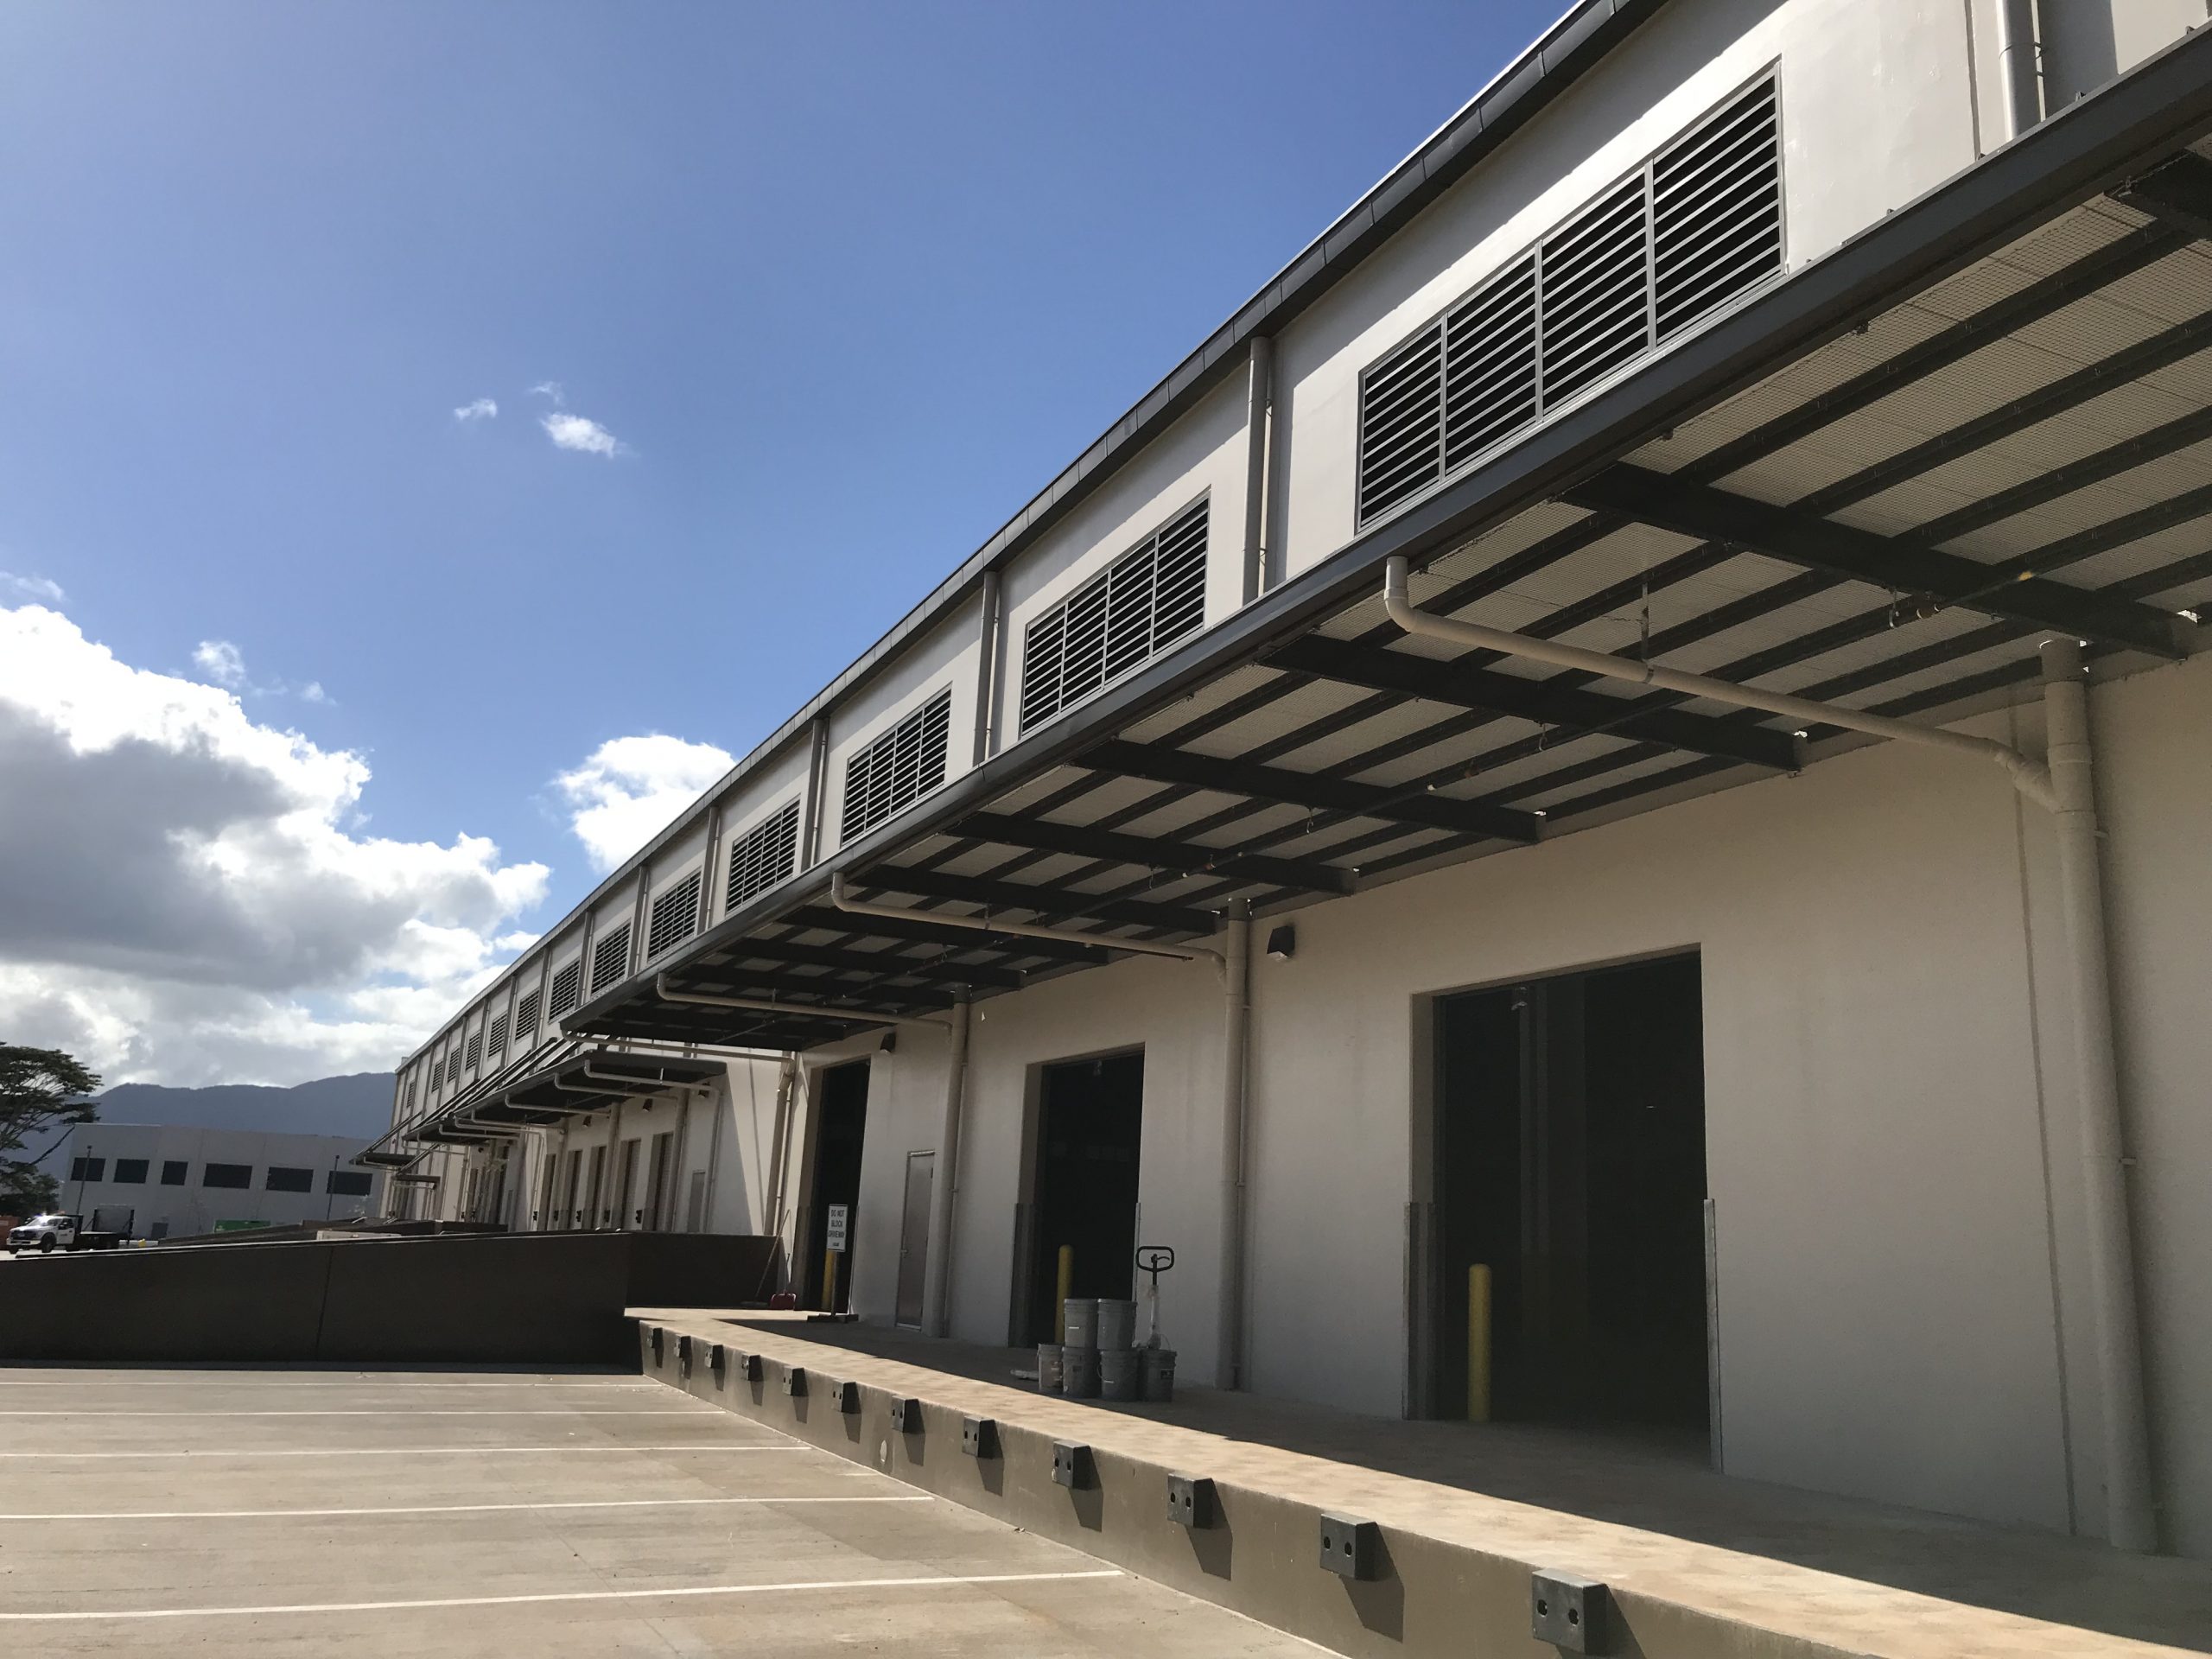 Warehouse & Distribution Facility for TCG Pali’i Vista